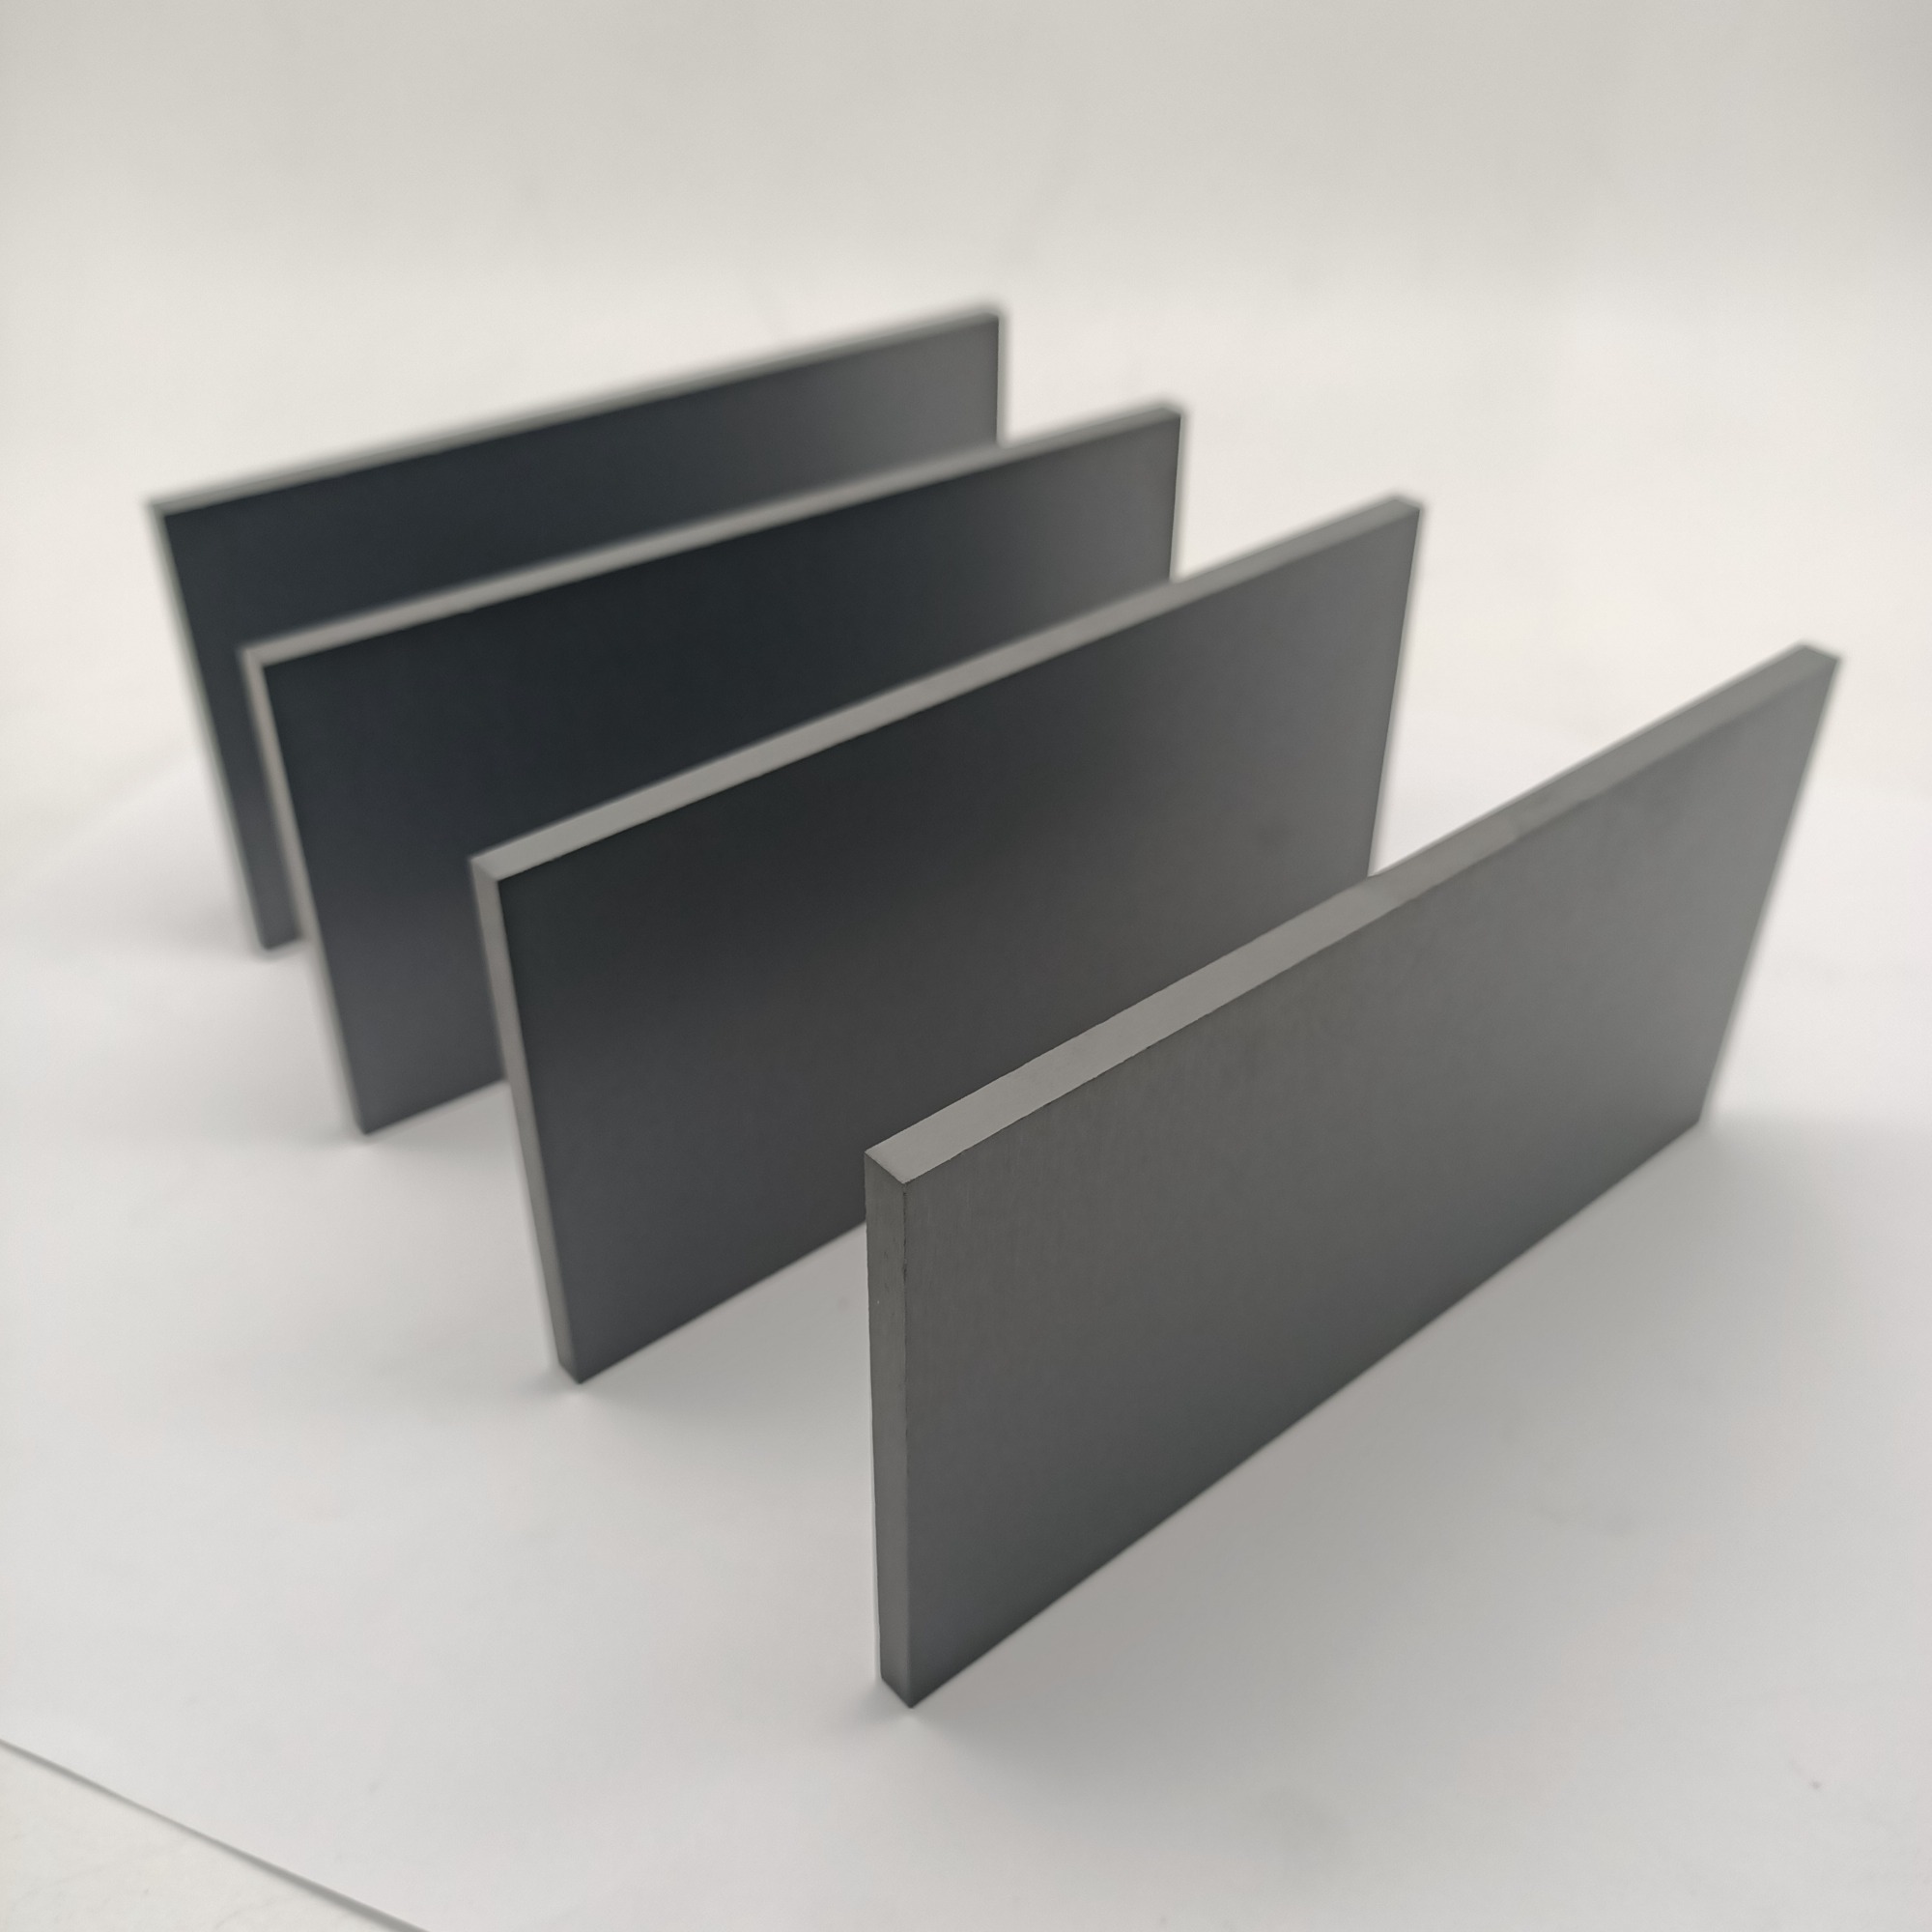 China Silicon Carbide Plate Manufacturers | Holis